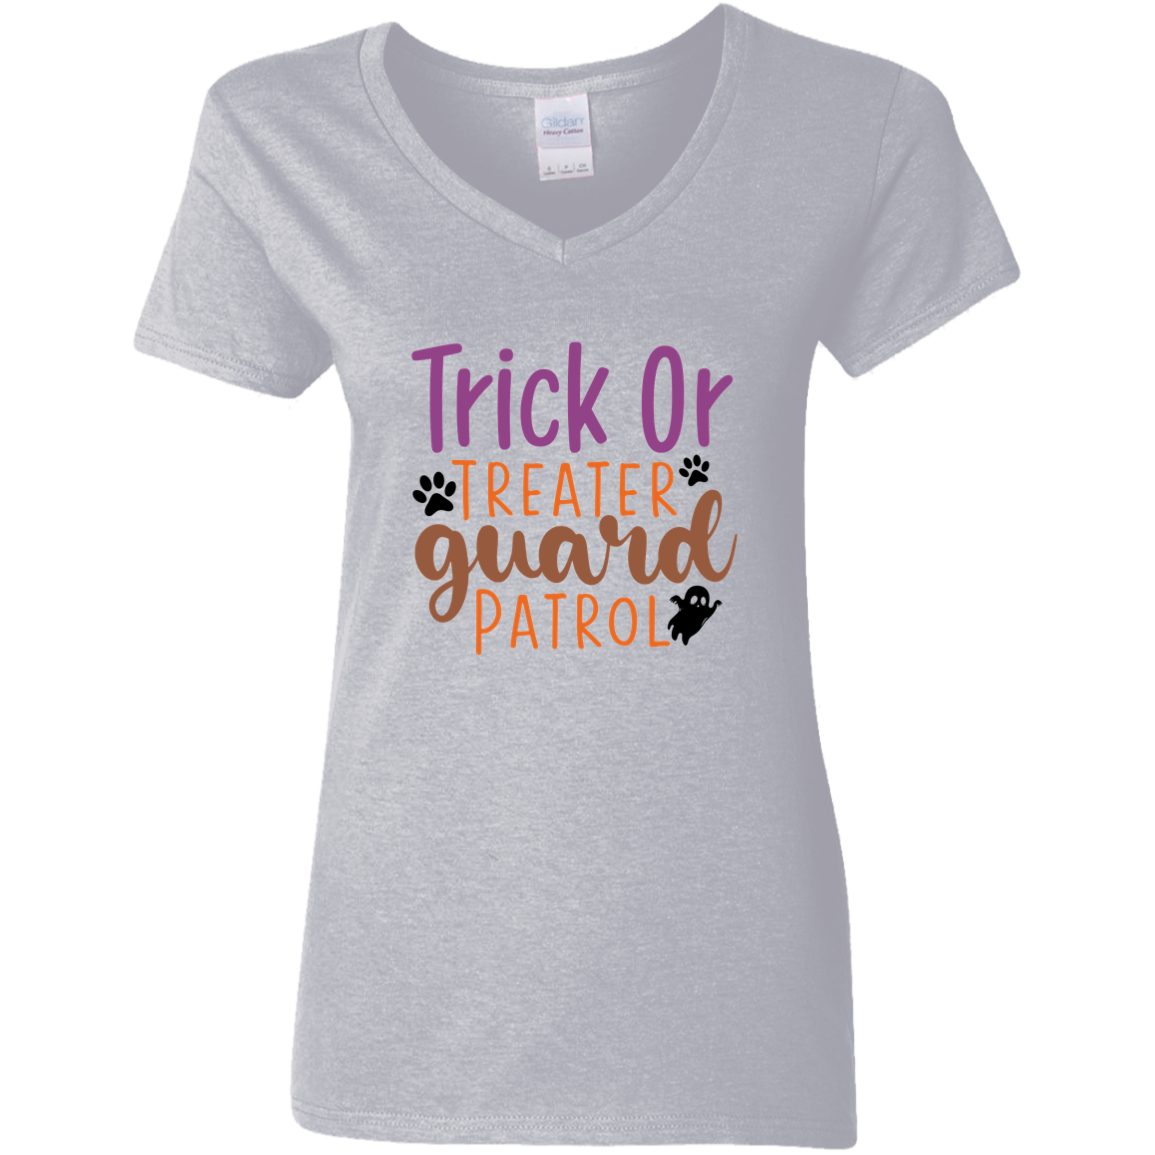 Trick or Treater Guard Patrol Ladies' V-Neck T-Shirt